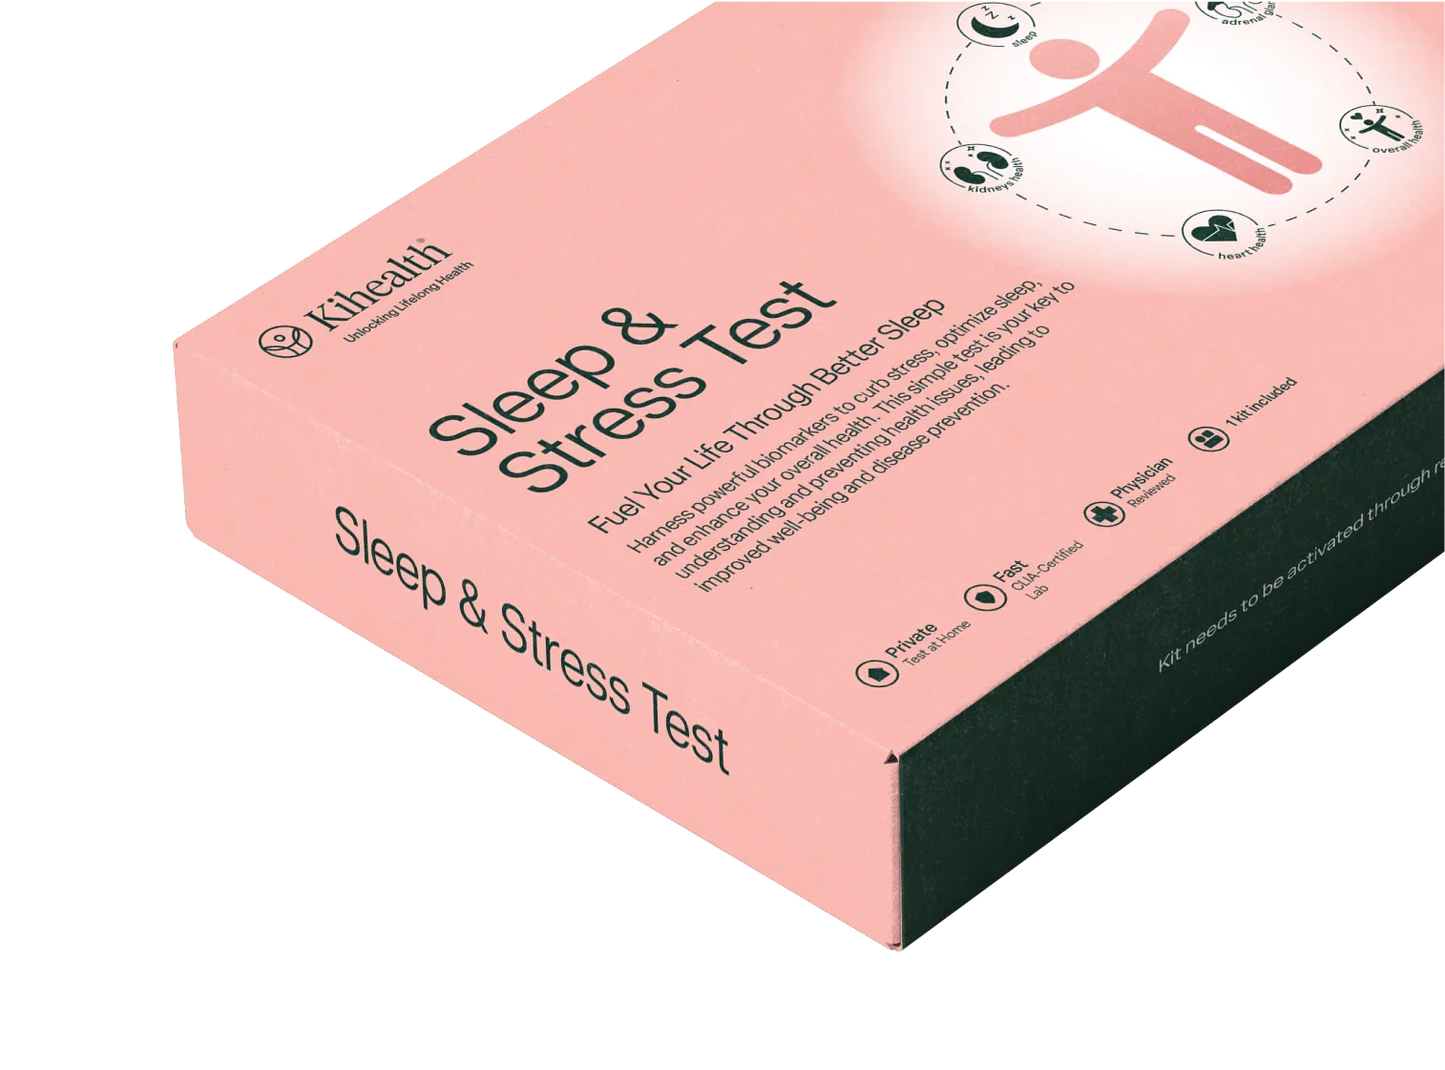 Sleep and Stress Test